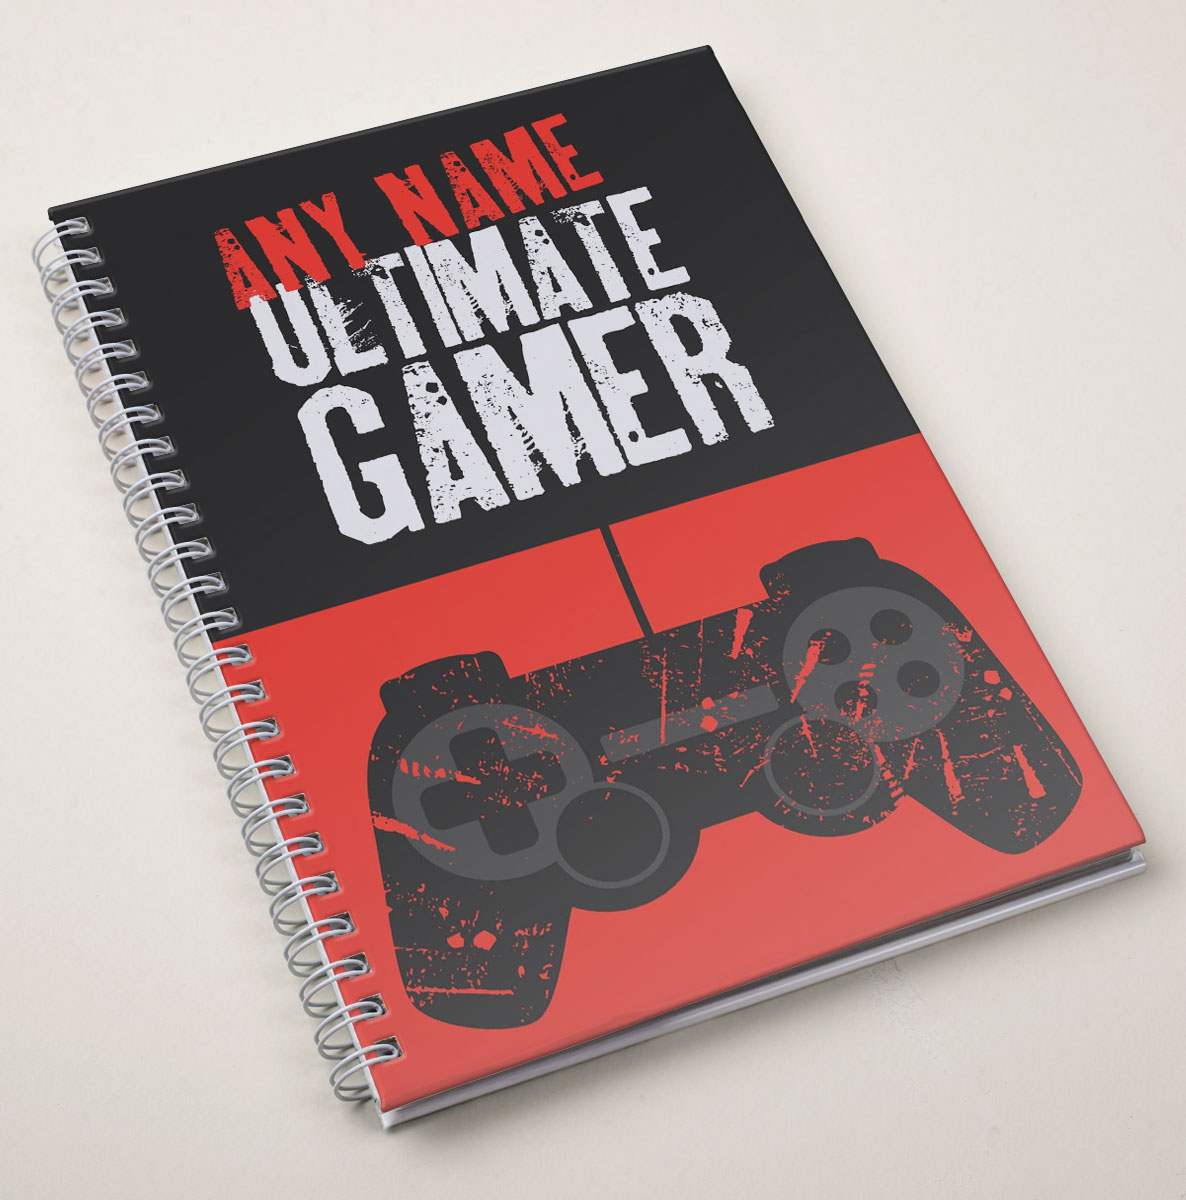 Personalised Ultimate Gamer Red Notebook